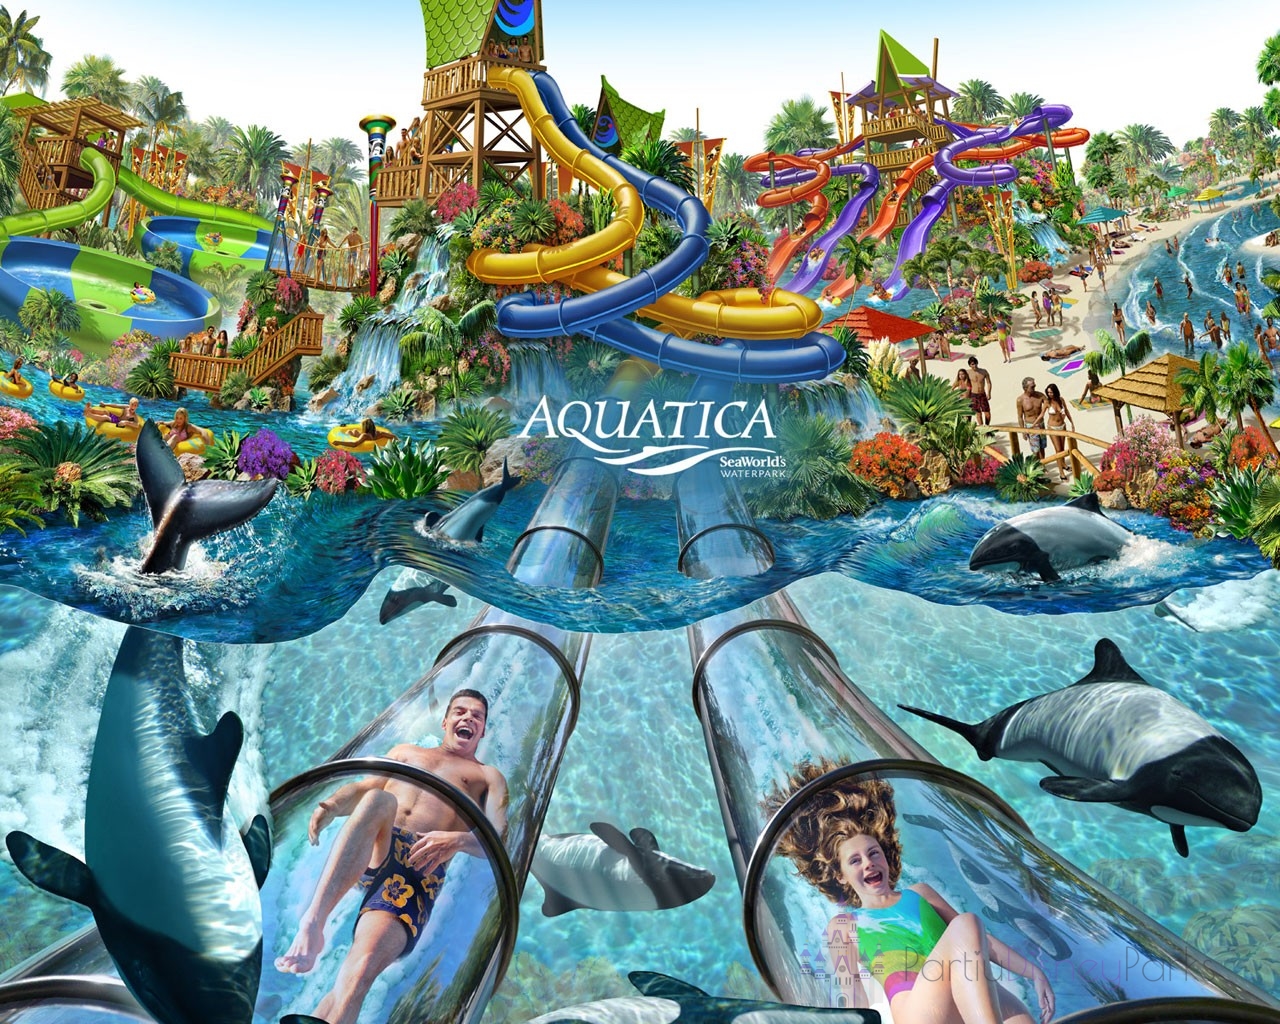 Parque Aquatica - Seaworld Wasserpark